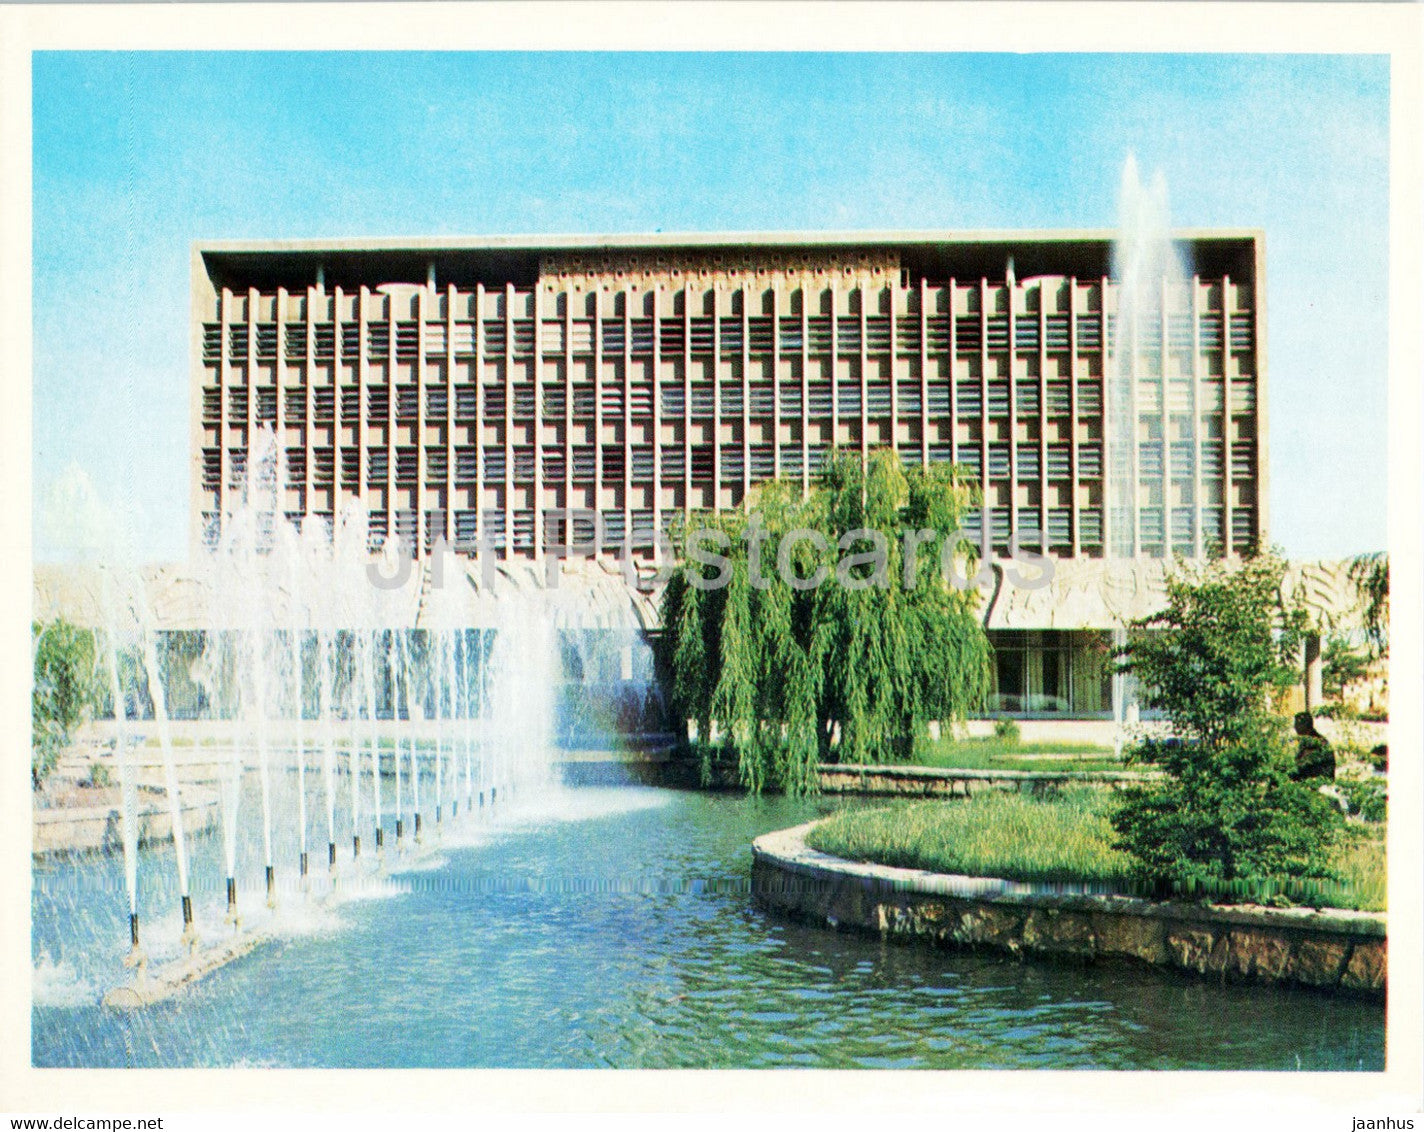 Ashgabat - Ashkhabad - Karakumstroi Managing Department - 1974 - Turkmenistan USSR - unused - JH Postcards